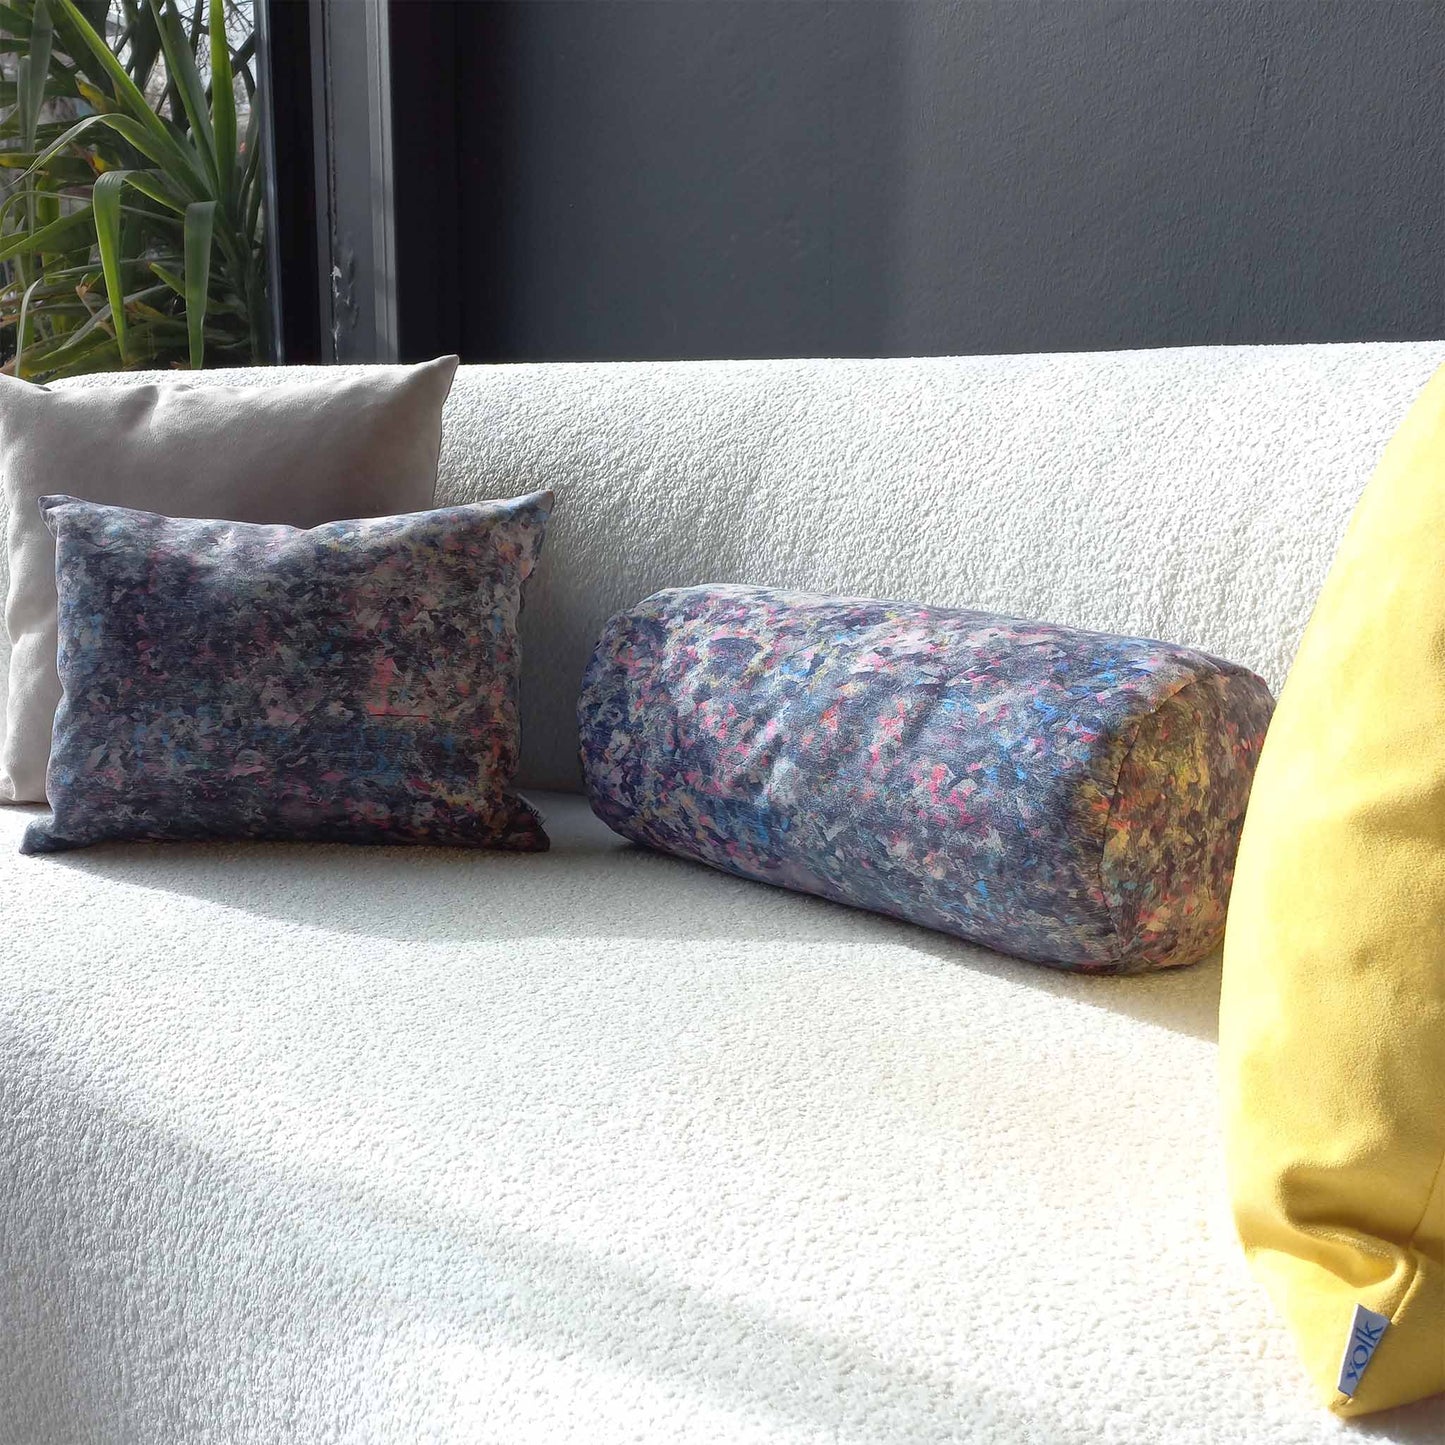 Decorative cushions on a sofa